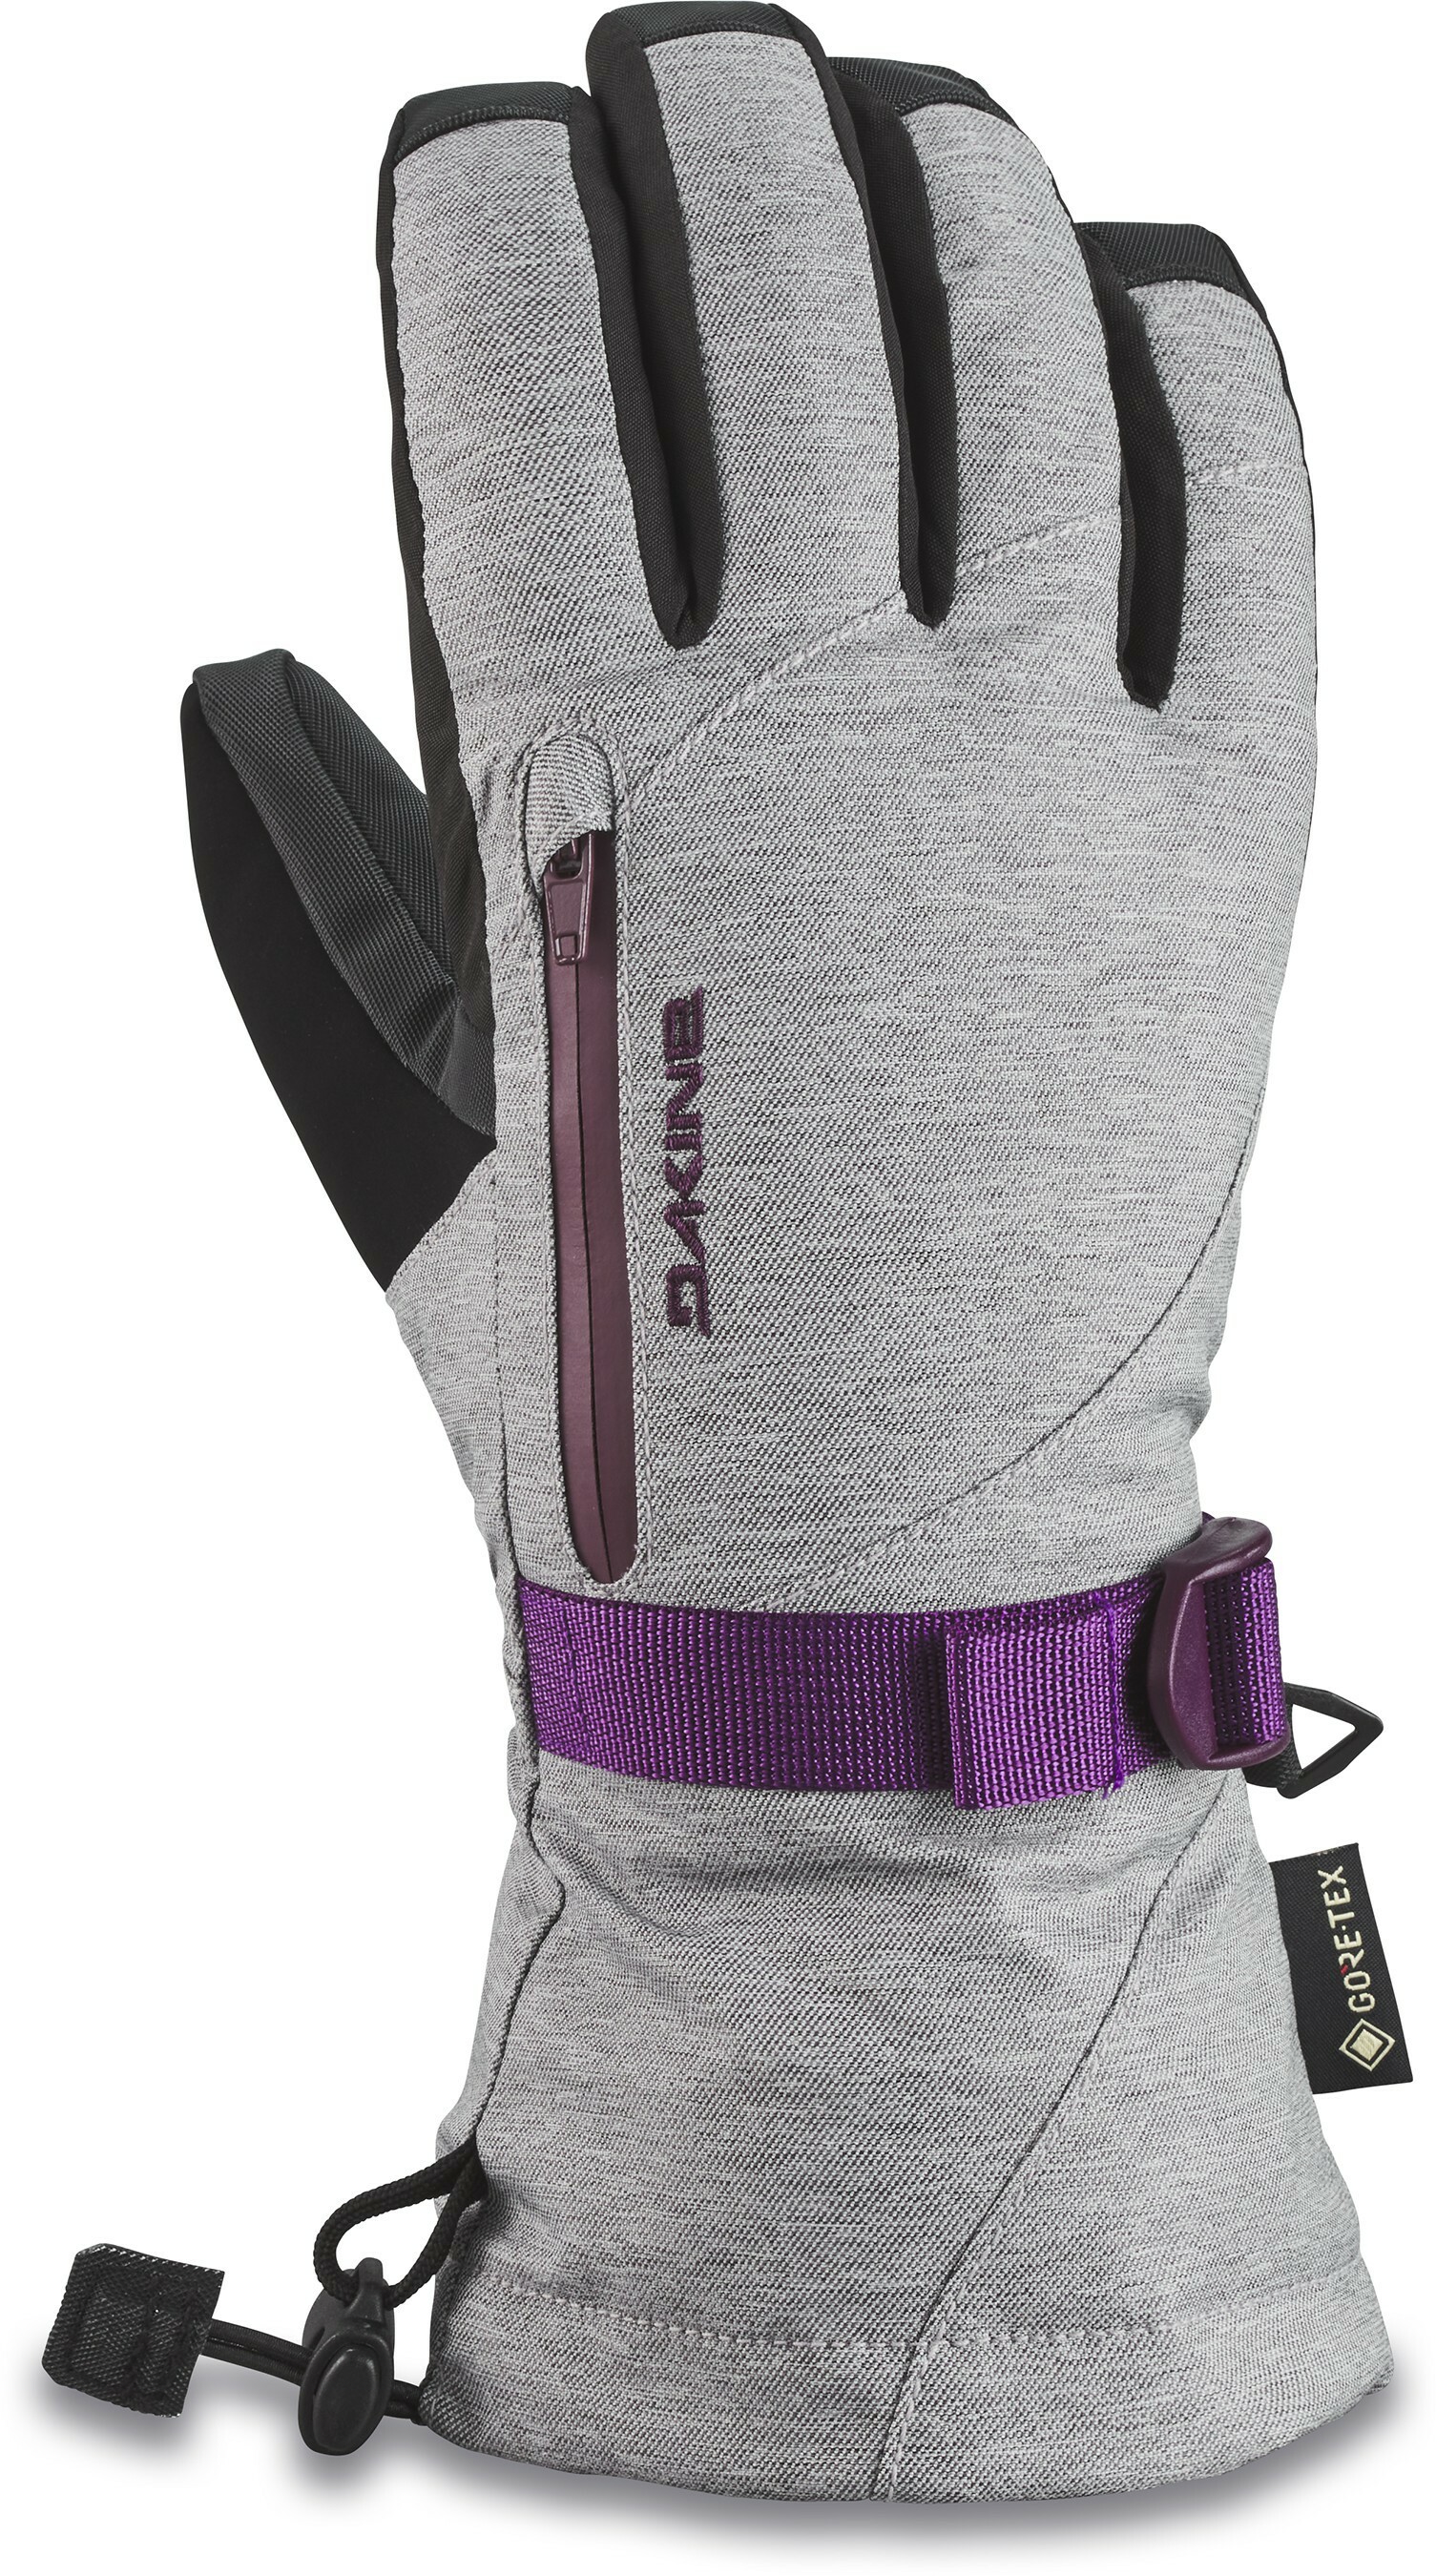 Sequoia GORE-TEX Glove - Women's